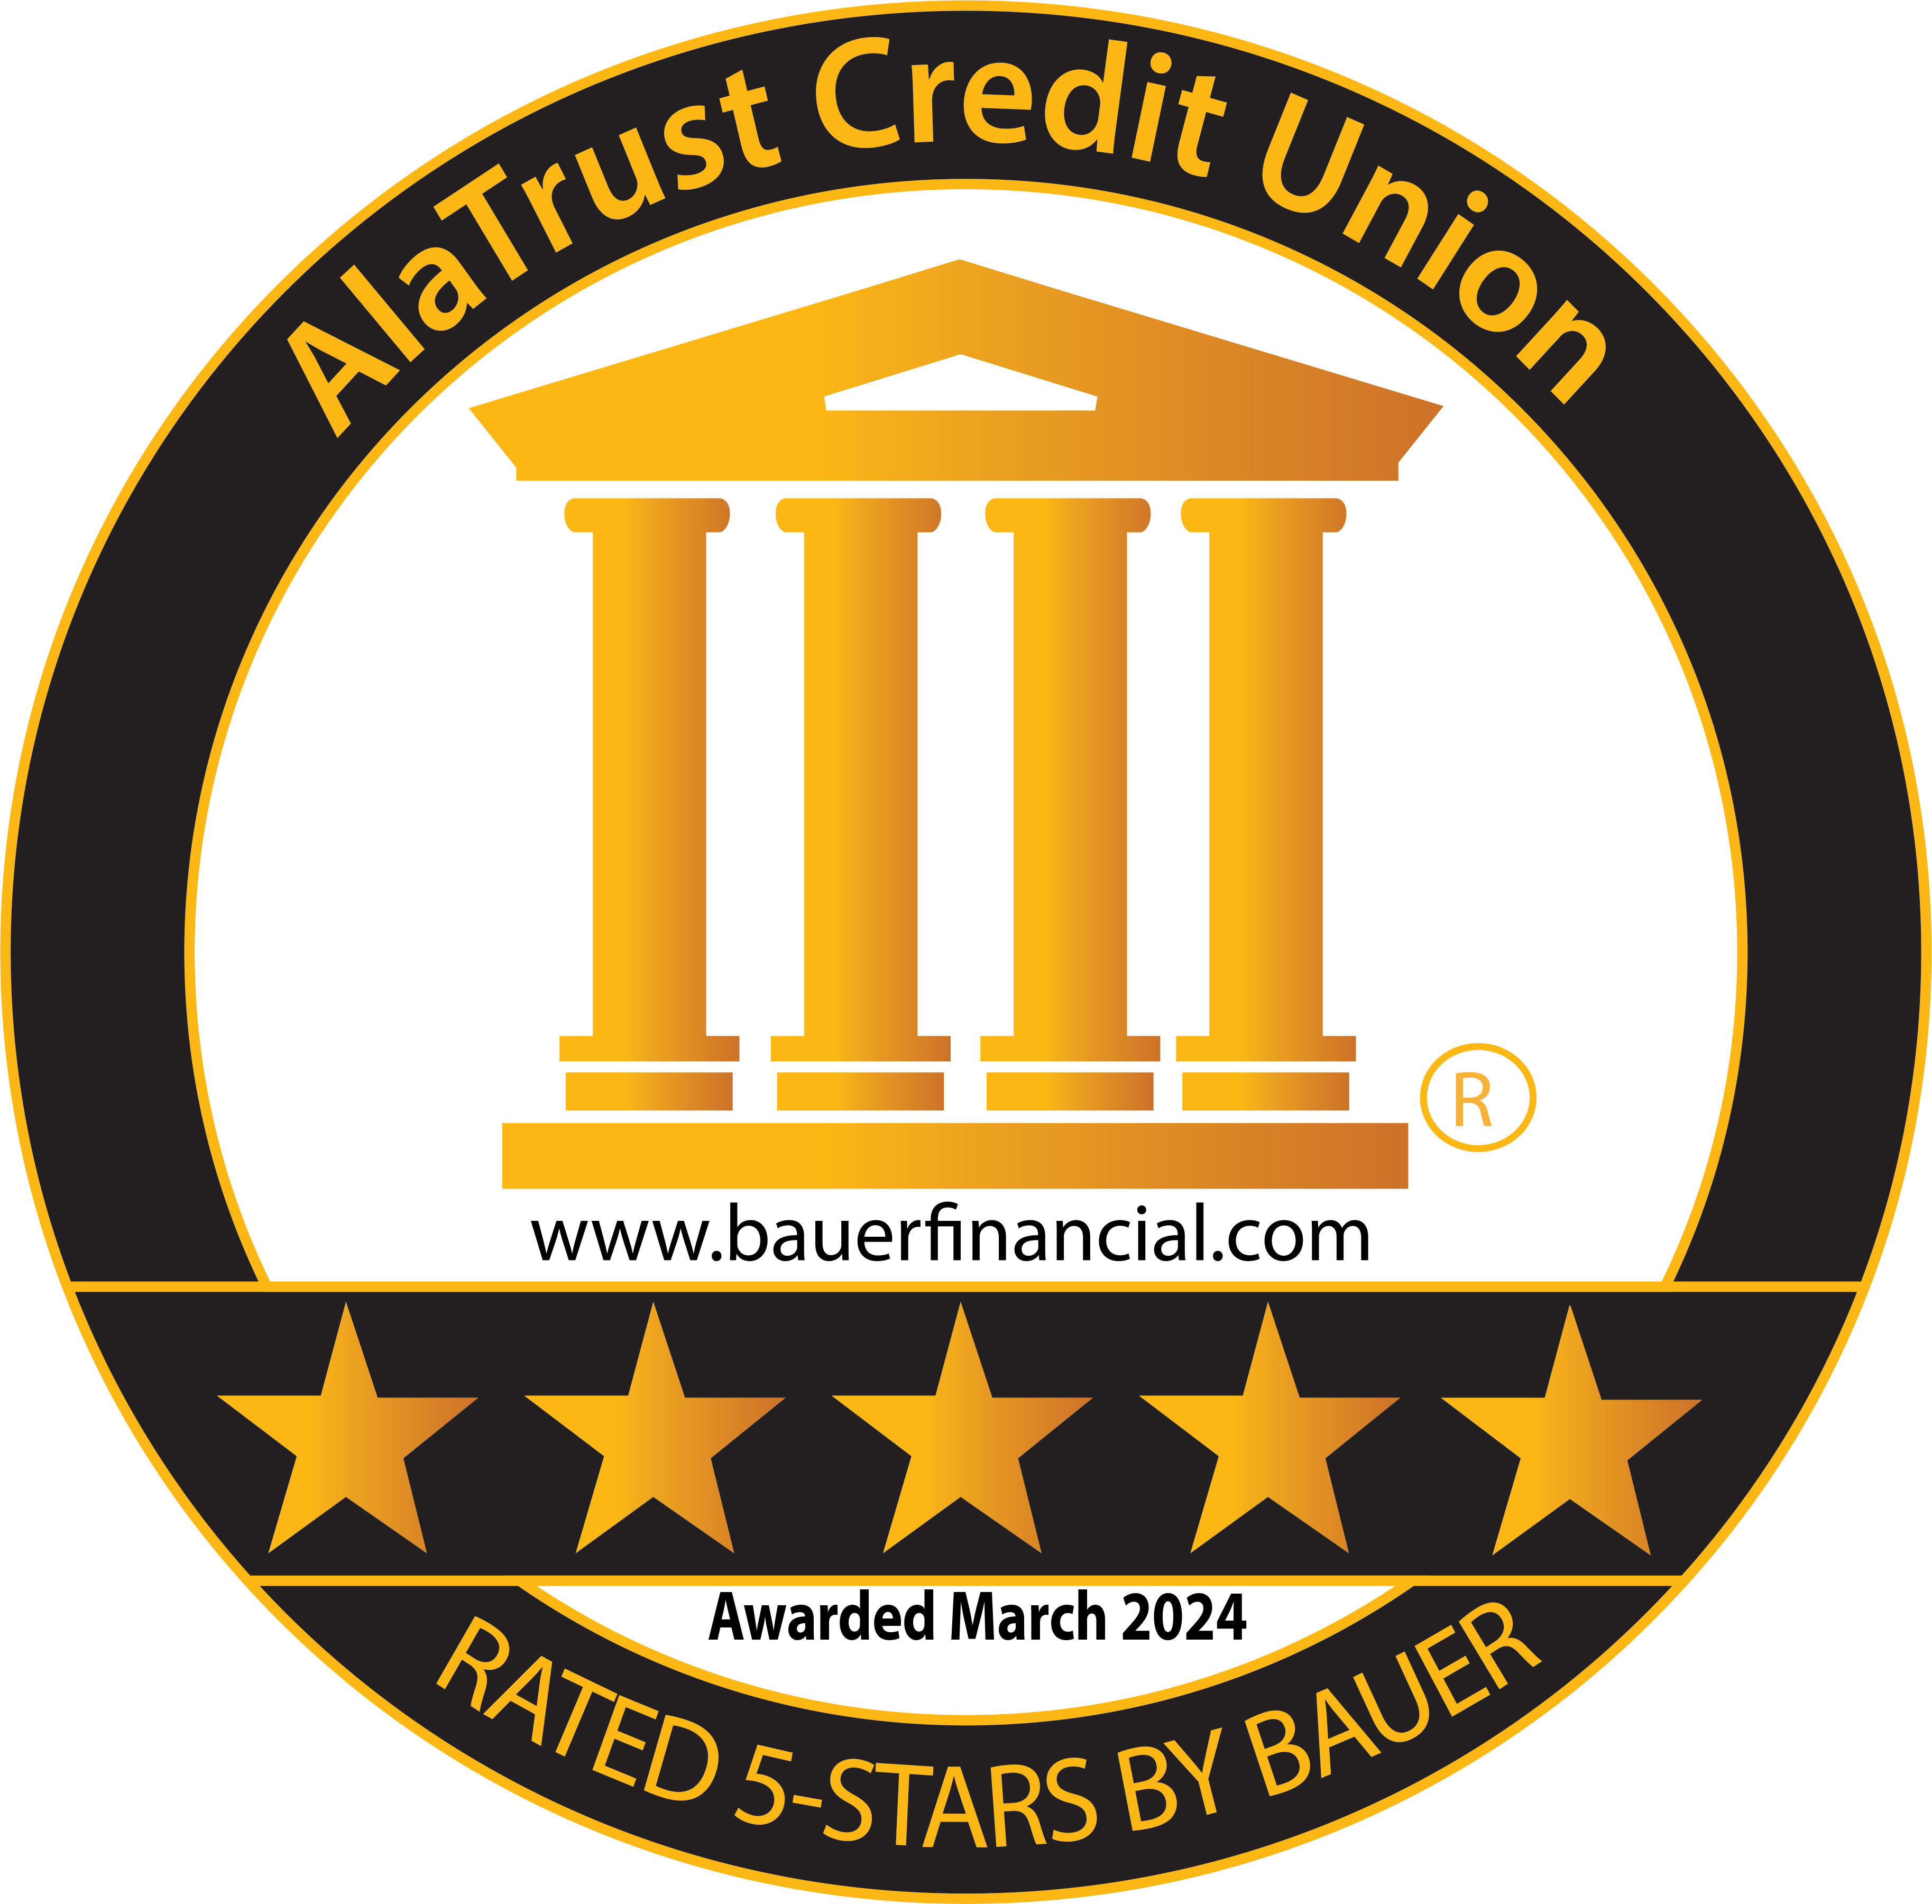 BauerFinancial awards AlaTrust Credit Union 5 stars 